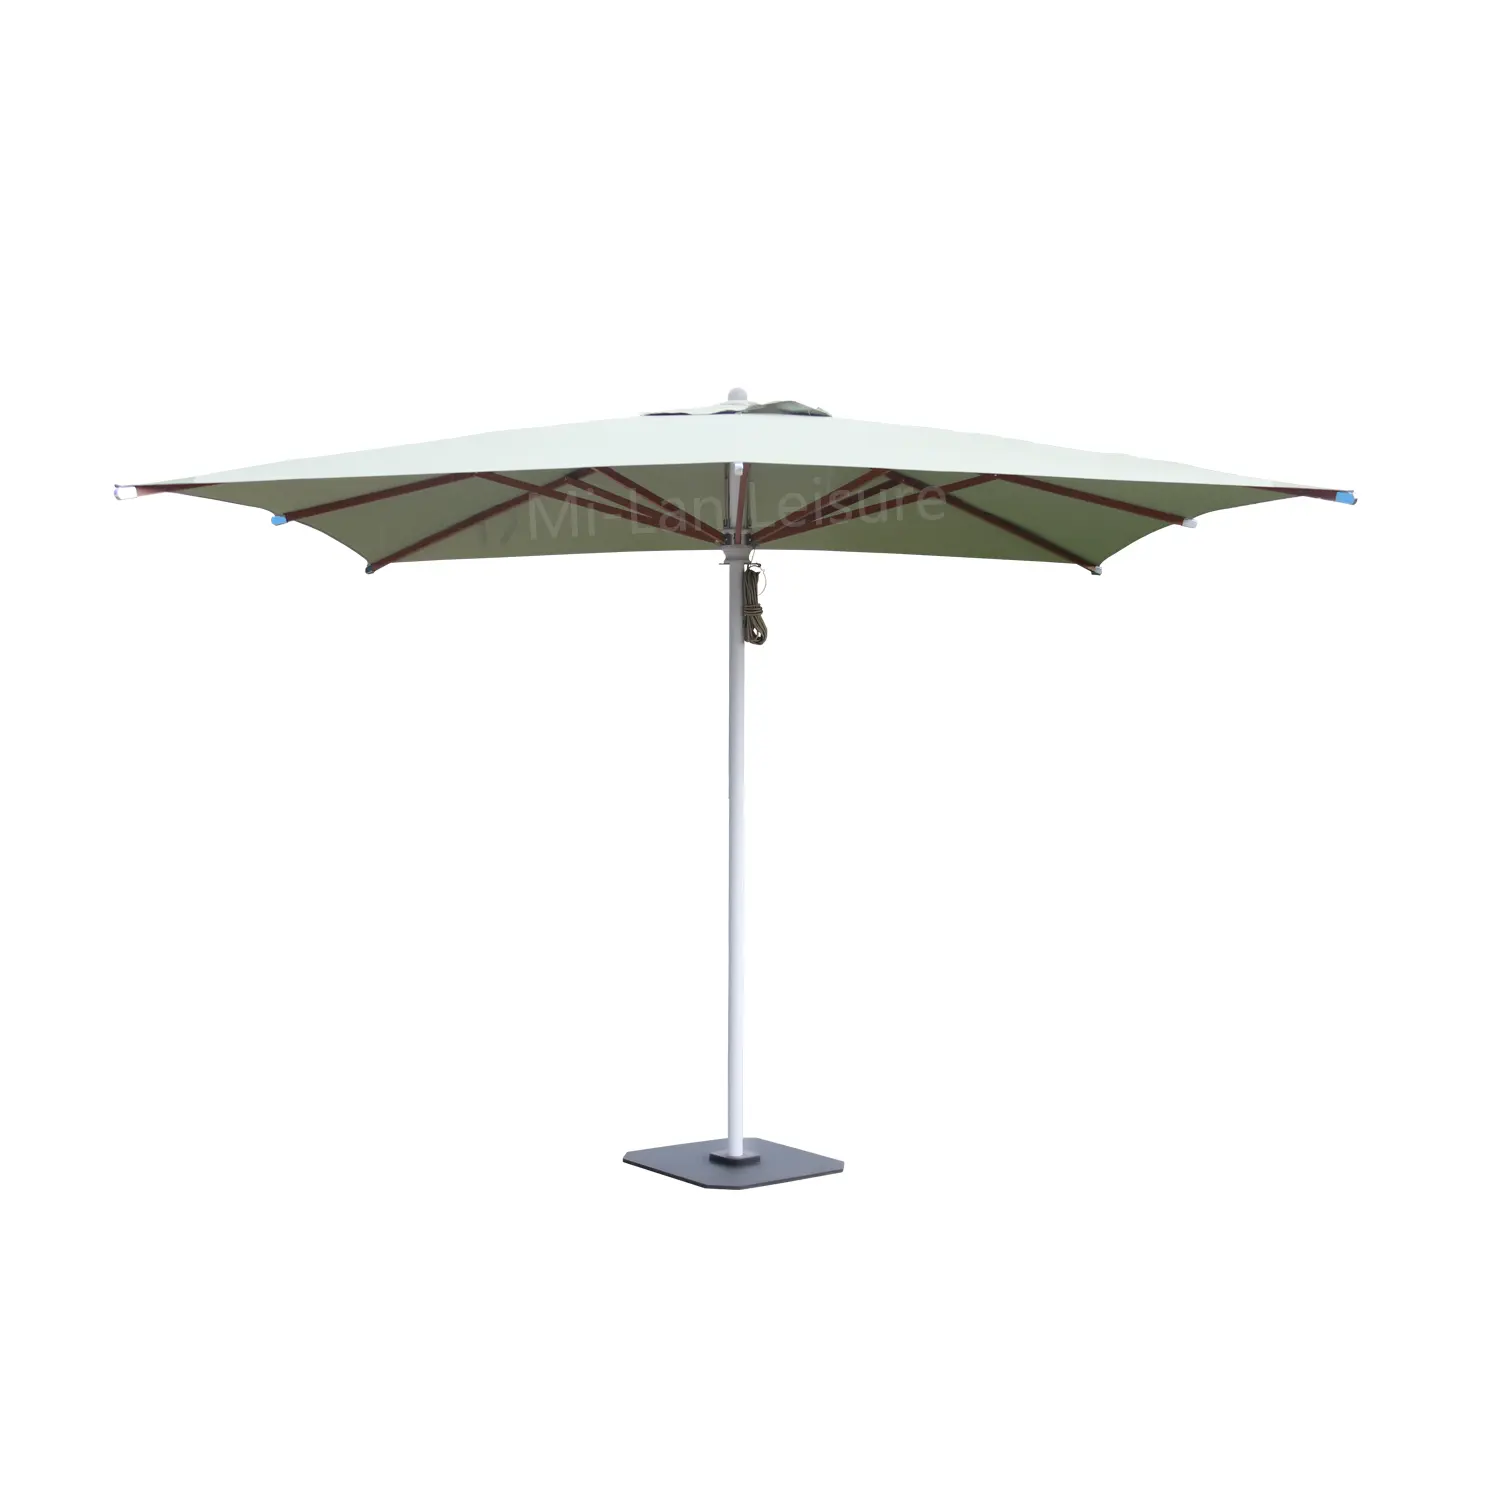 Quadratische Riemens cheibe Aluminium großer Regenschirm Außen terrasse Garten Sonnenschirme Regenschirm